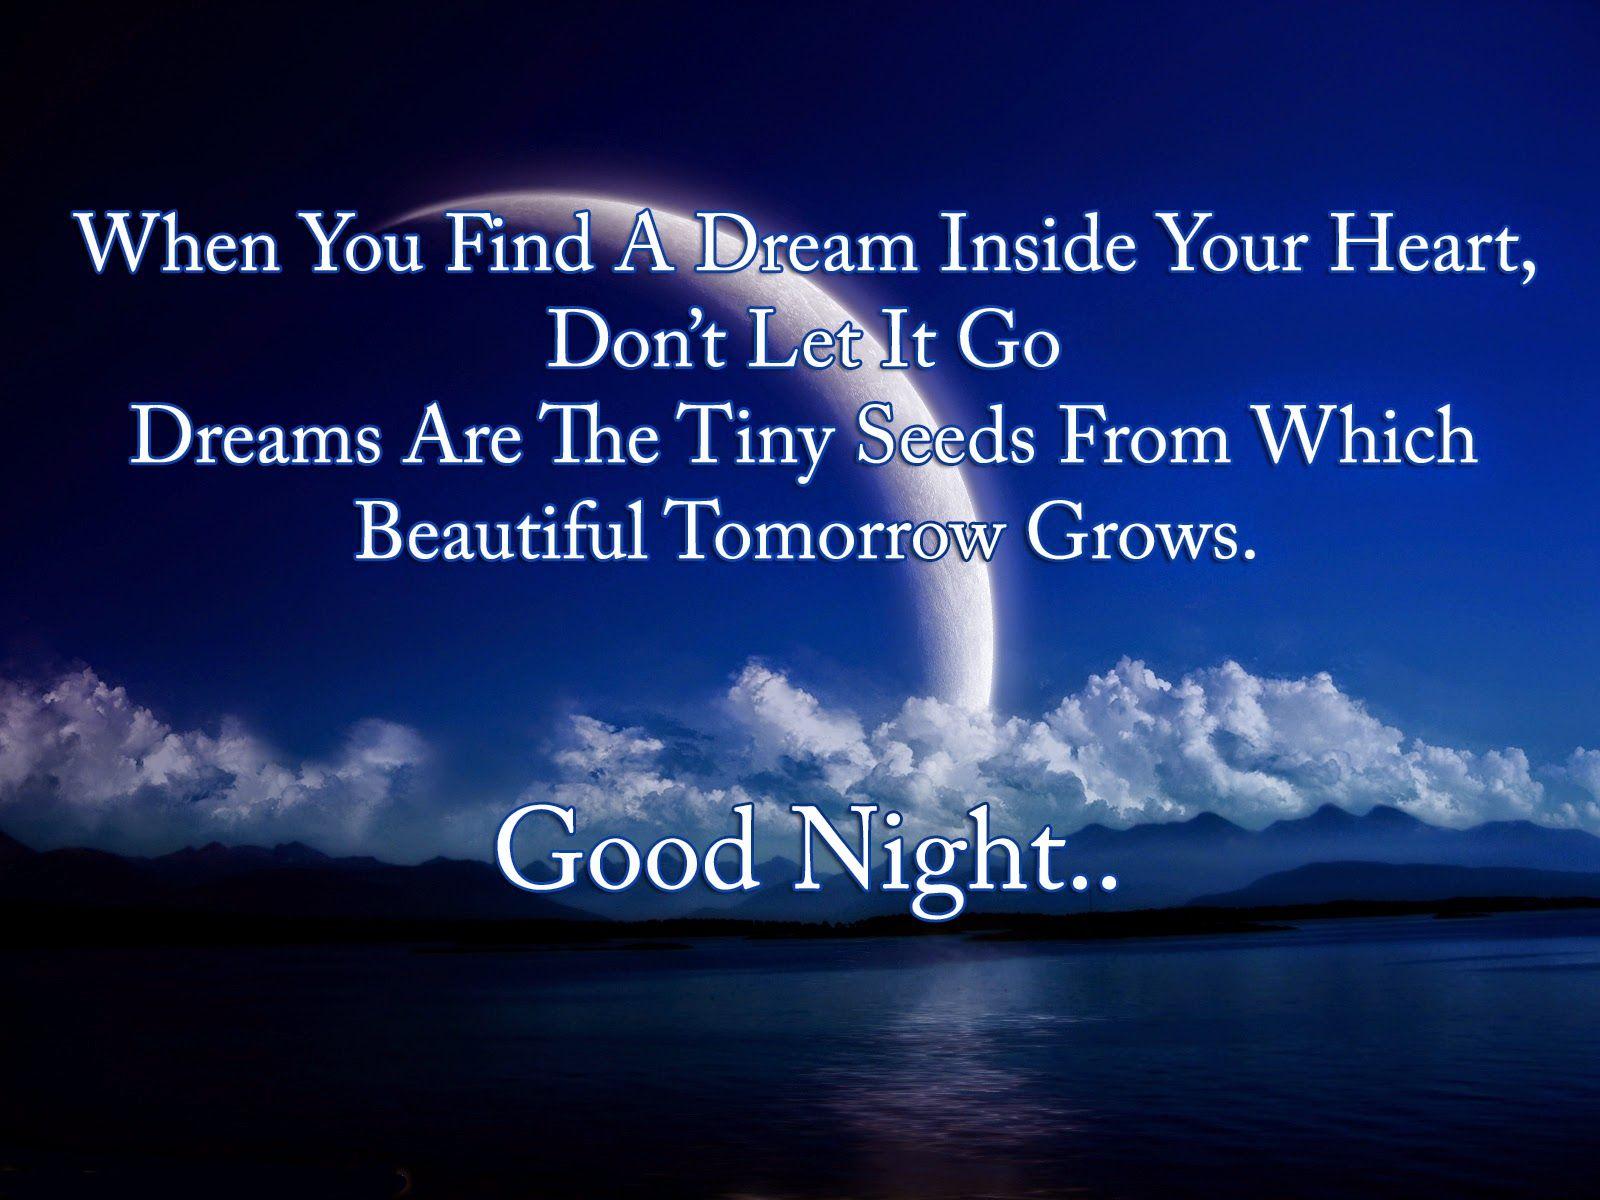 Good Night Quote Image. Best Free Desktop HD Wallpaper